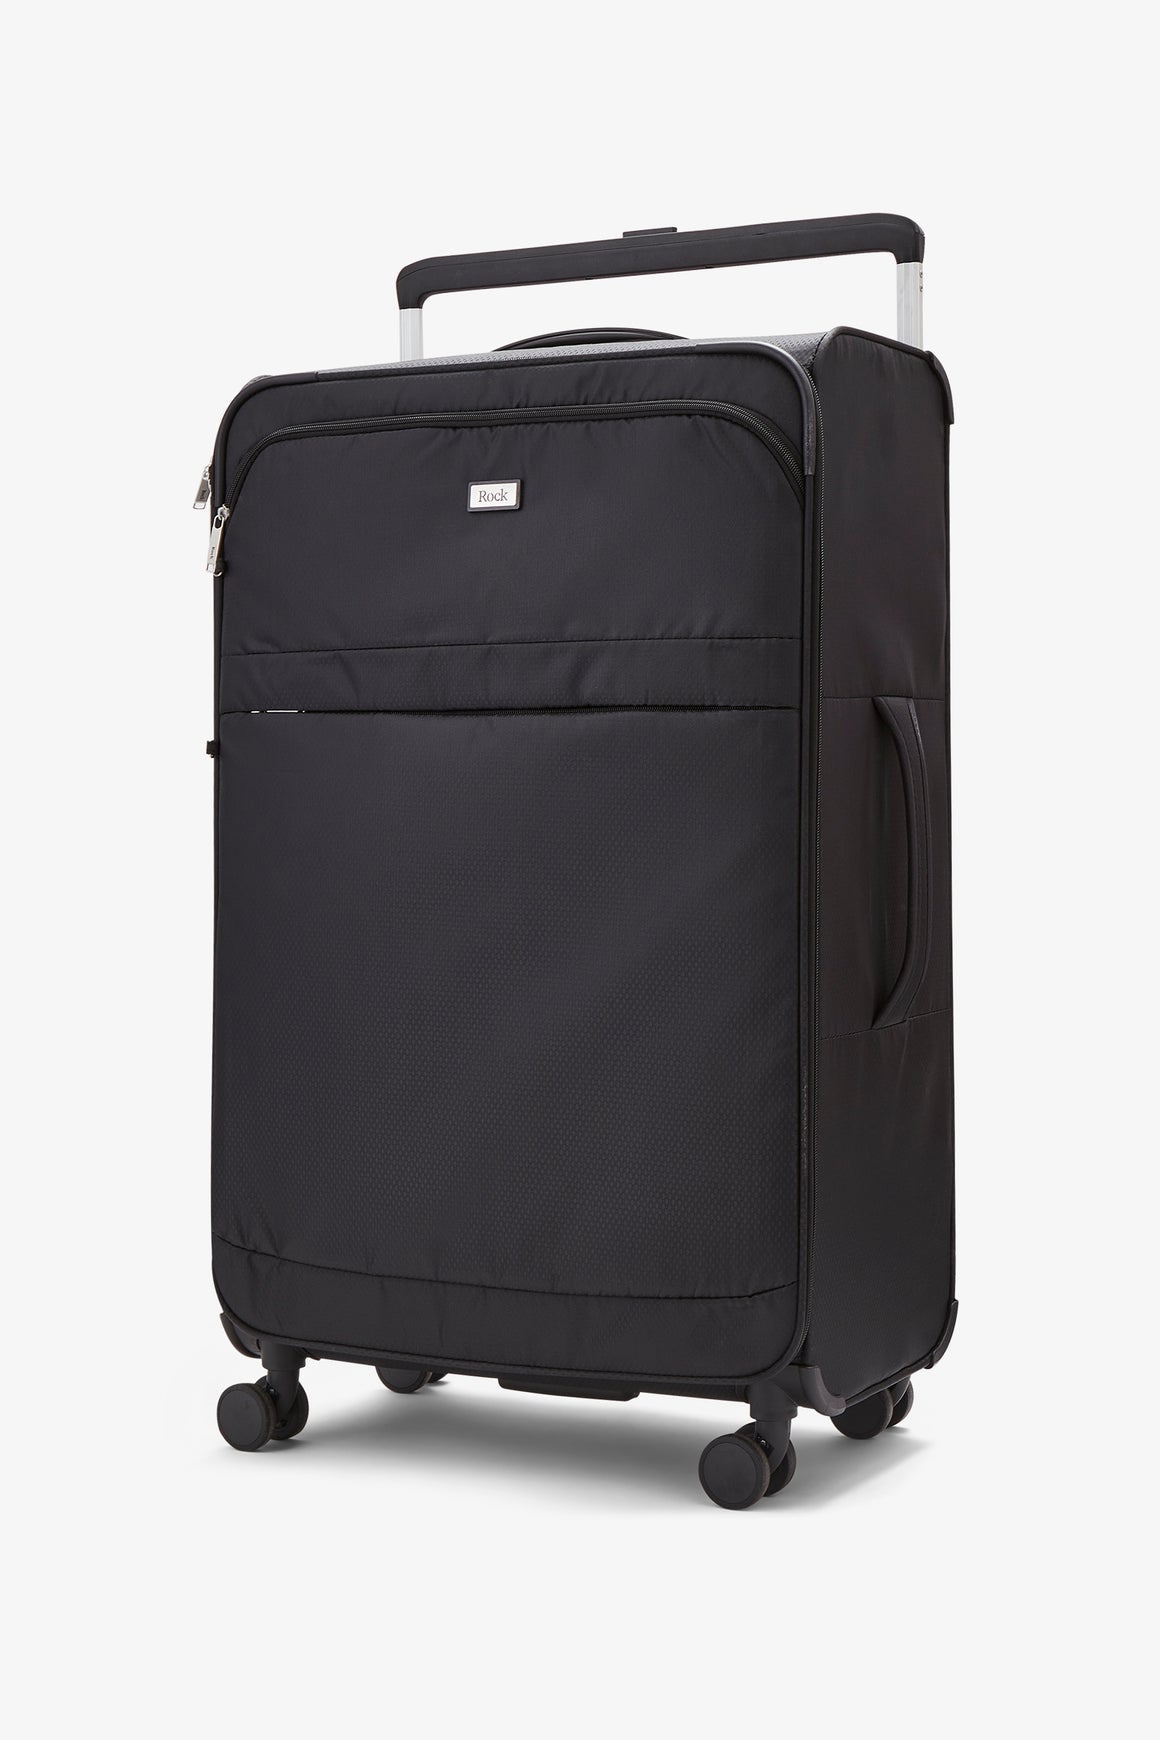 Rocklite Large Suitcase